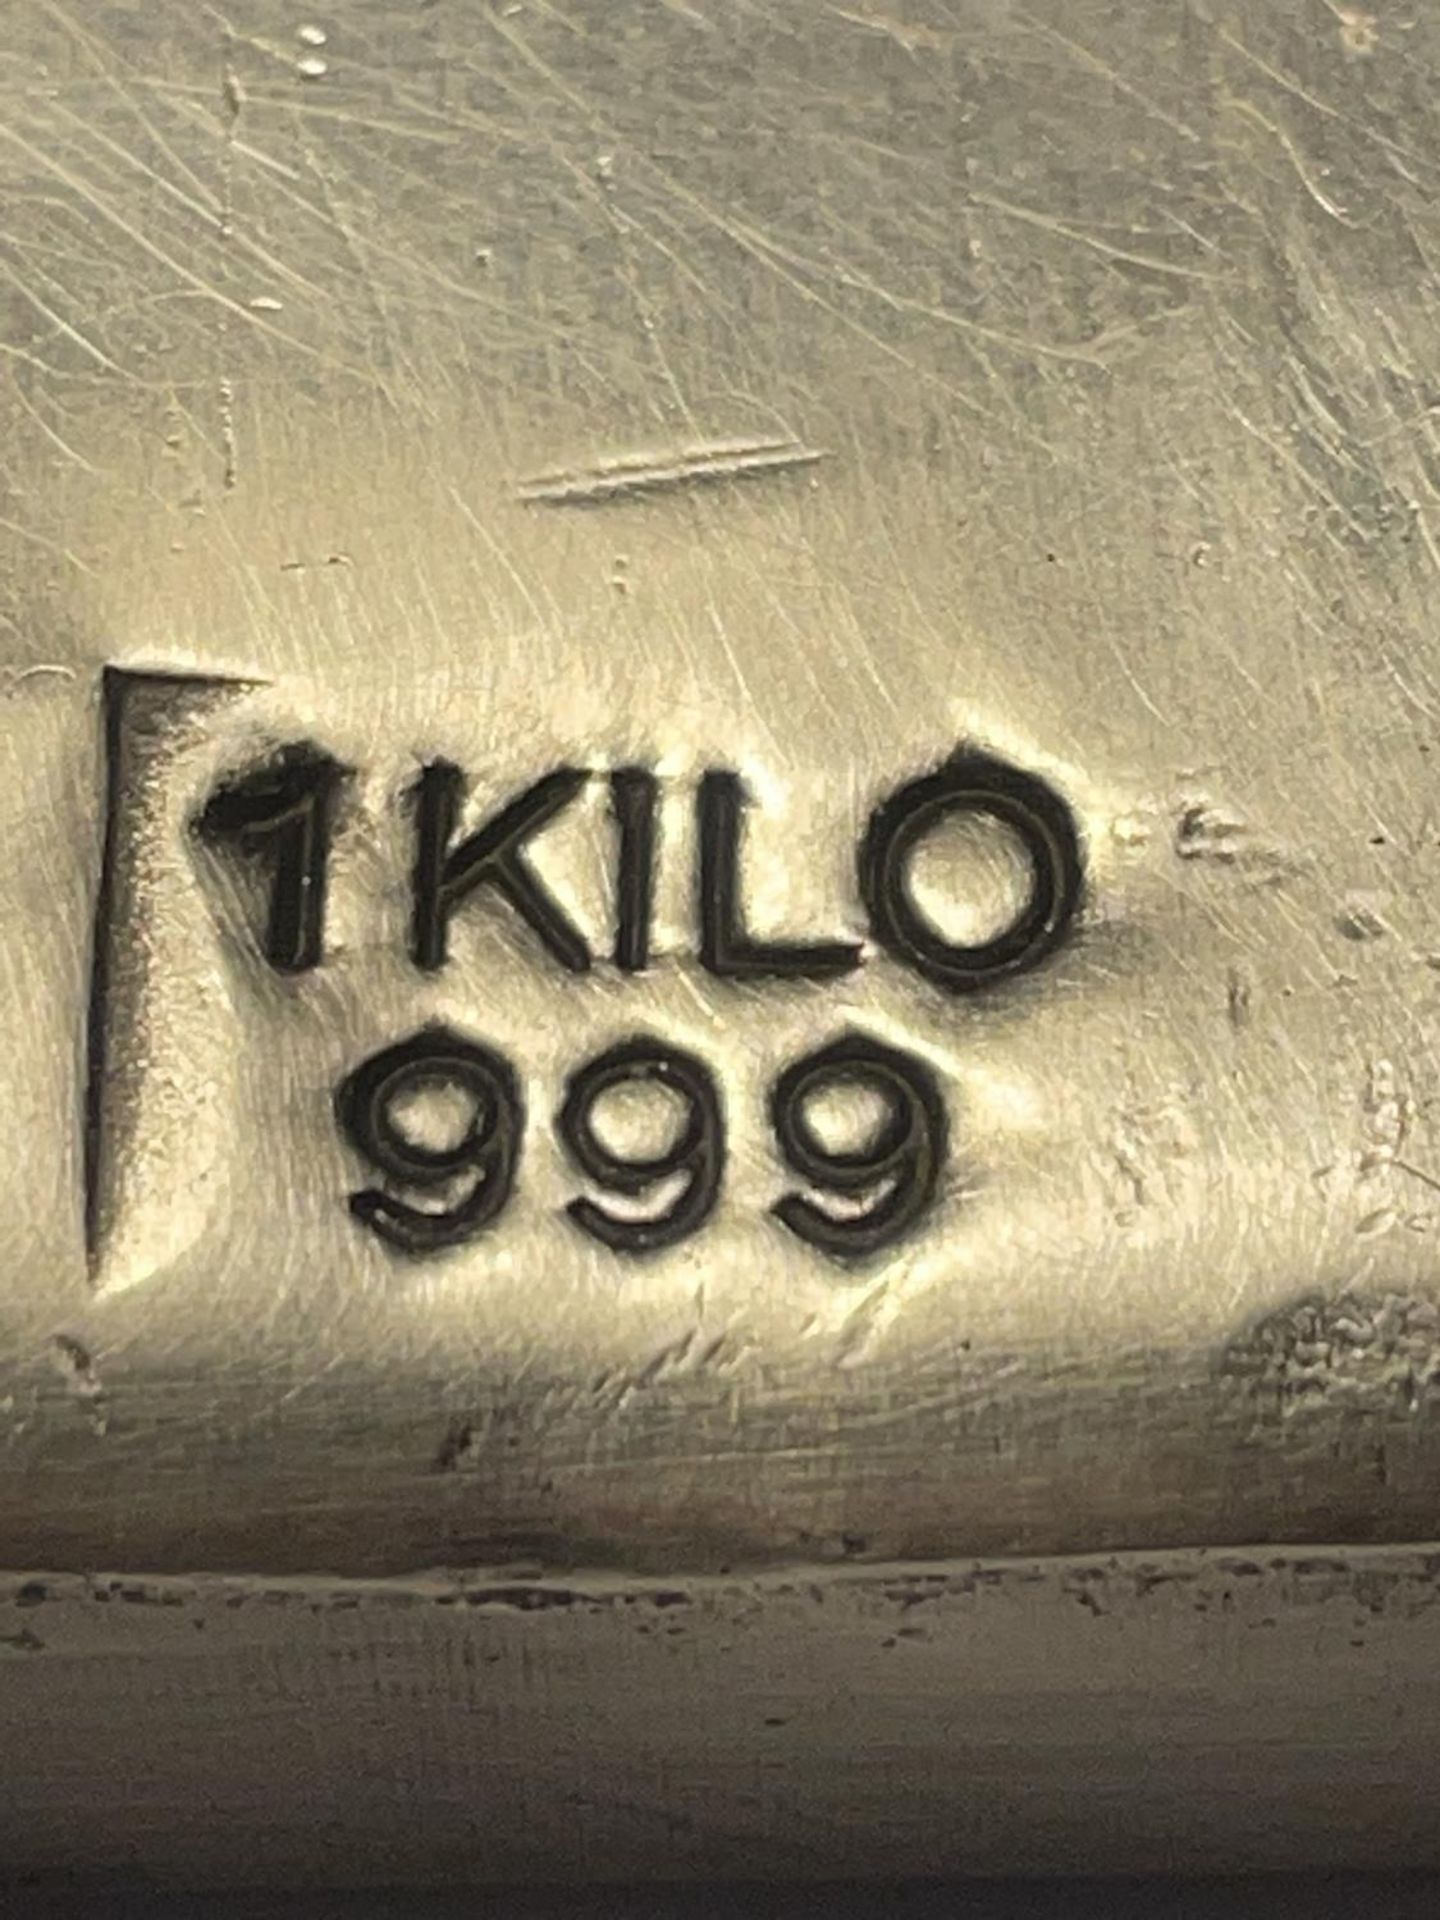 A 1 KILO .999 SILVER BAR INGOT BY THE PERTH MINT AUSTRALIA - Image 3 of 3